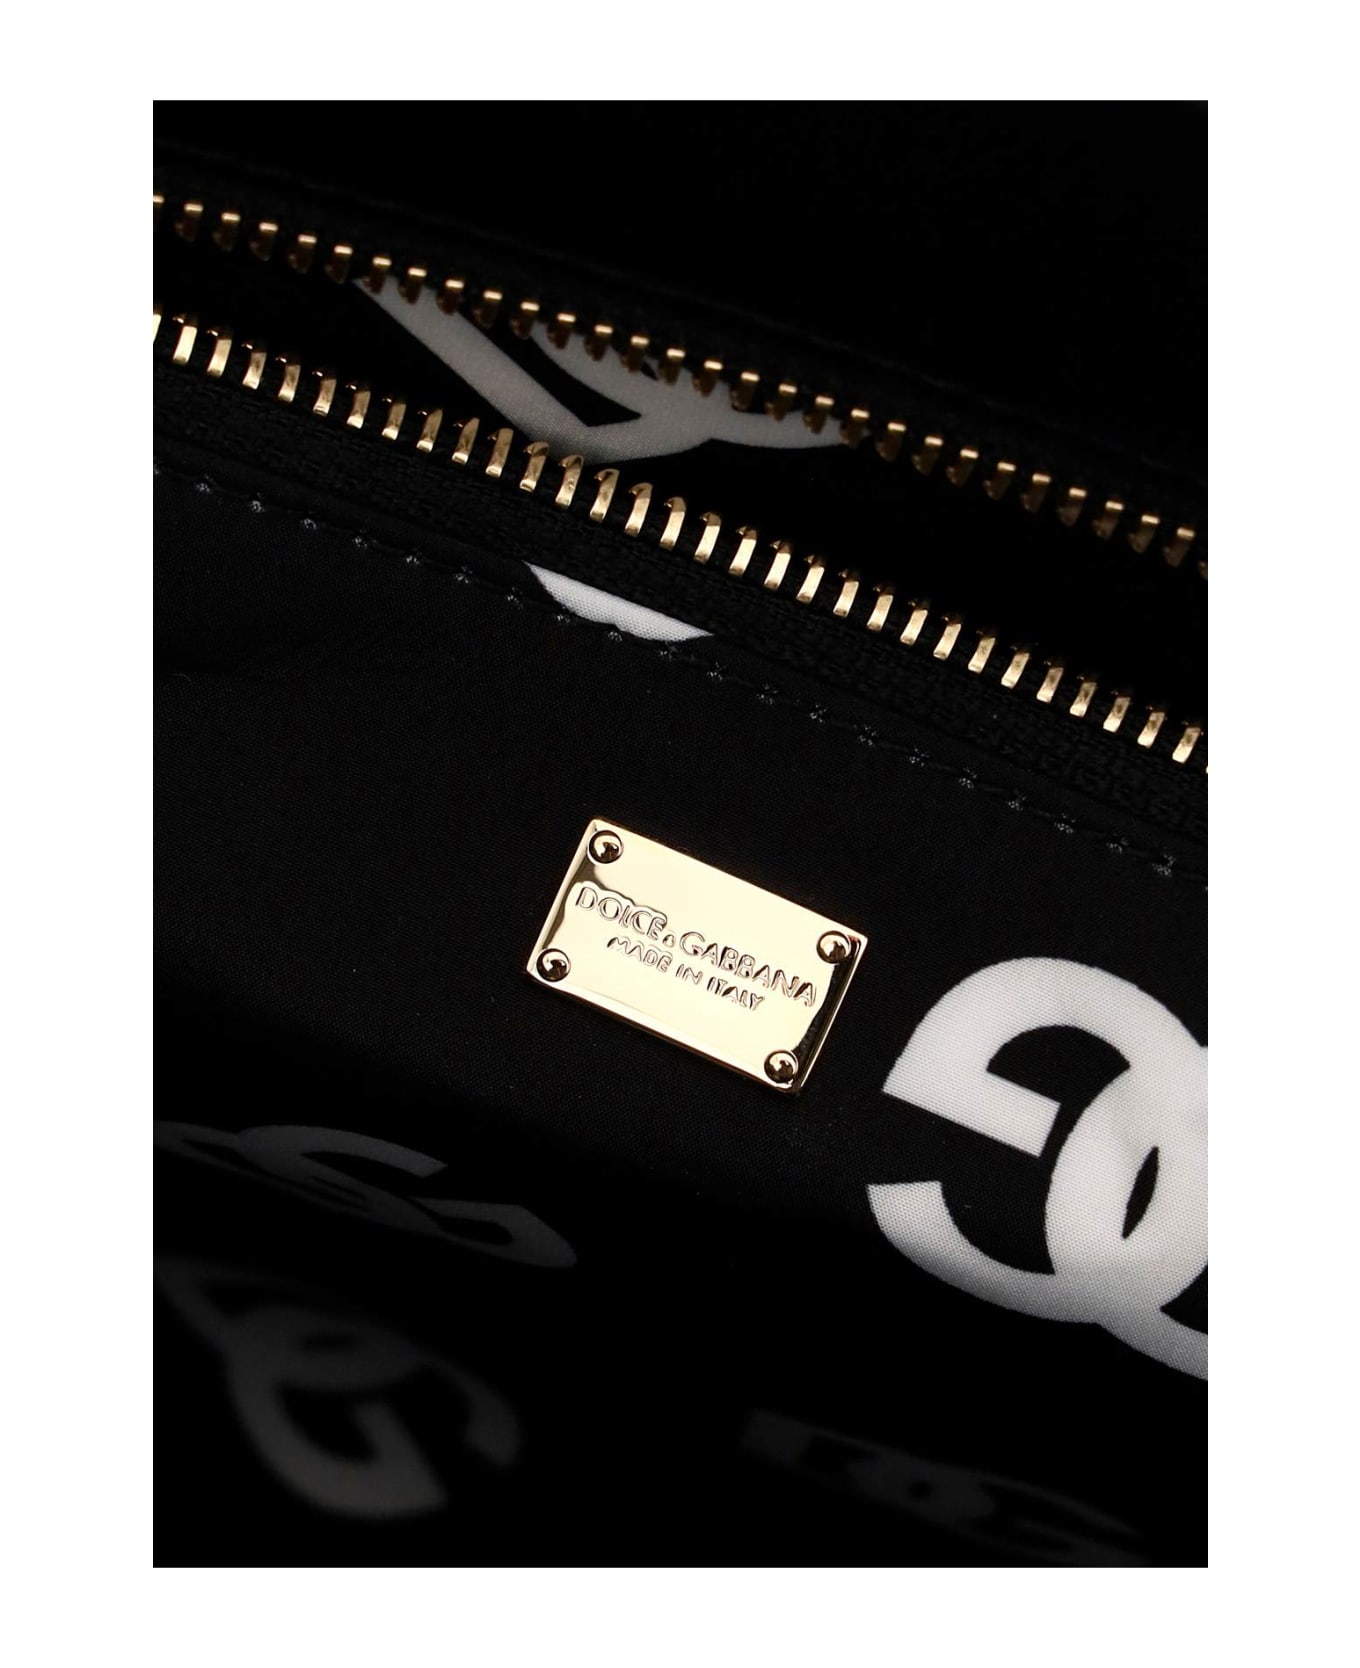 Dolce & Gabbana Dg Logo Shopping Bag - Black トートバッグ